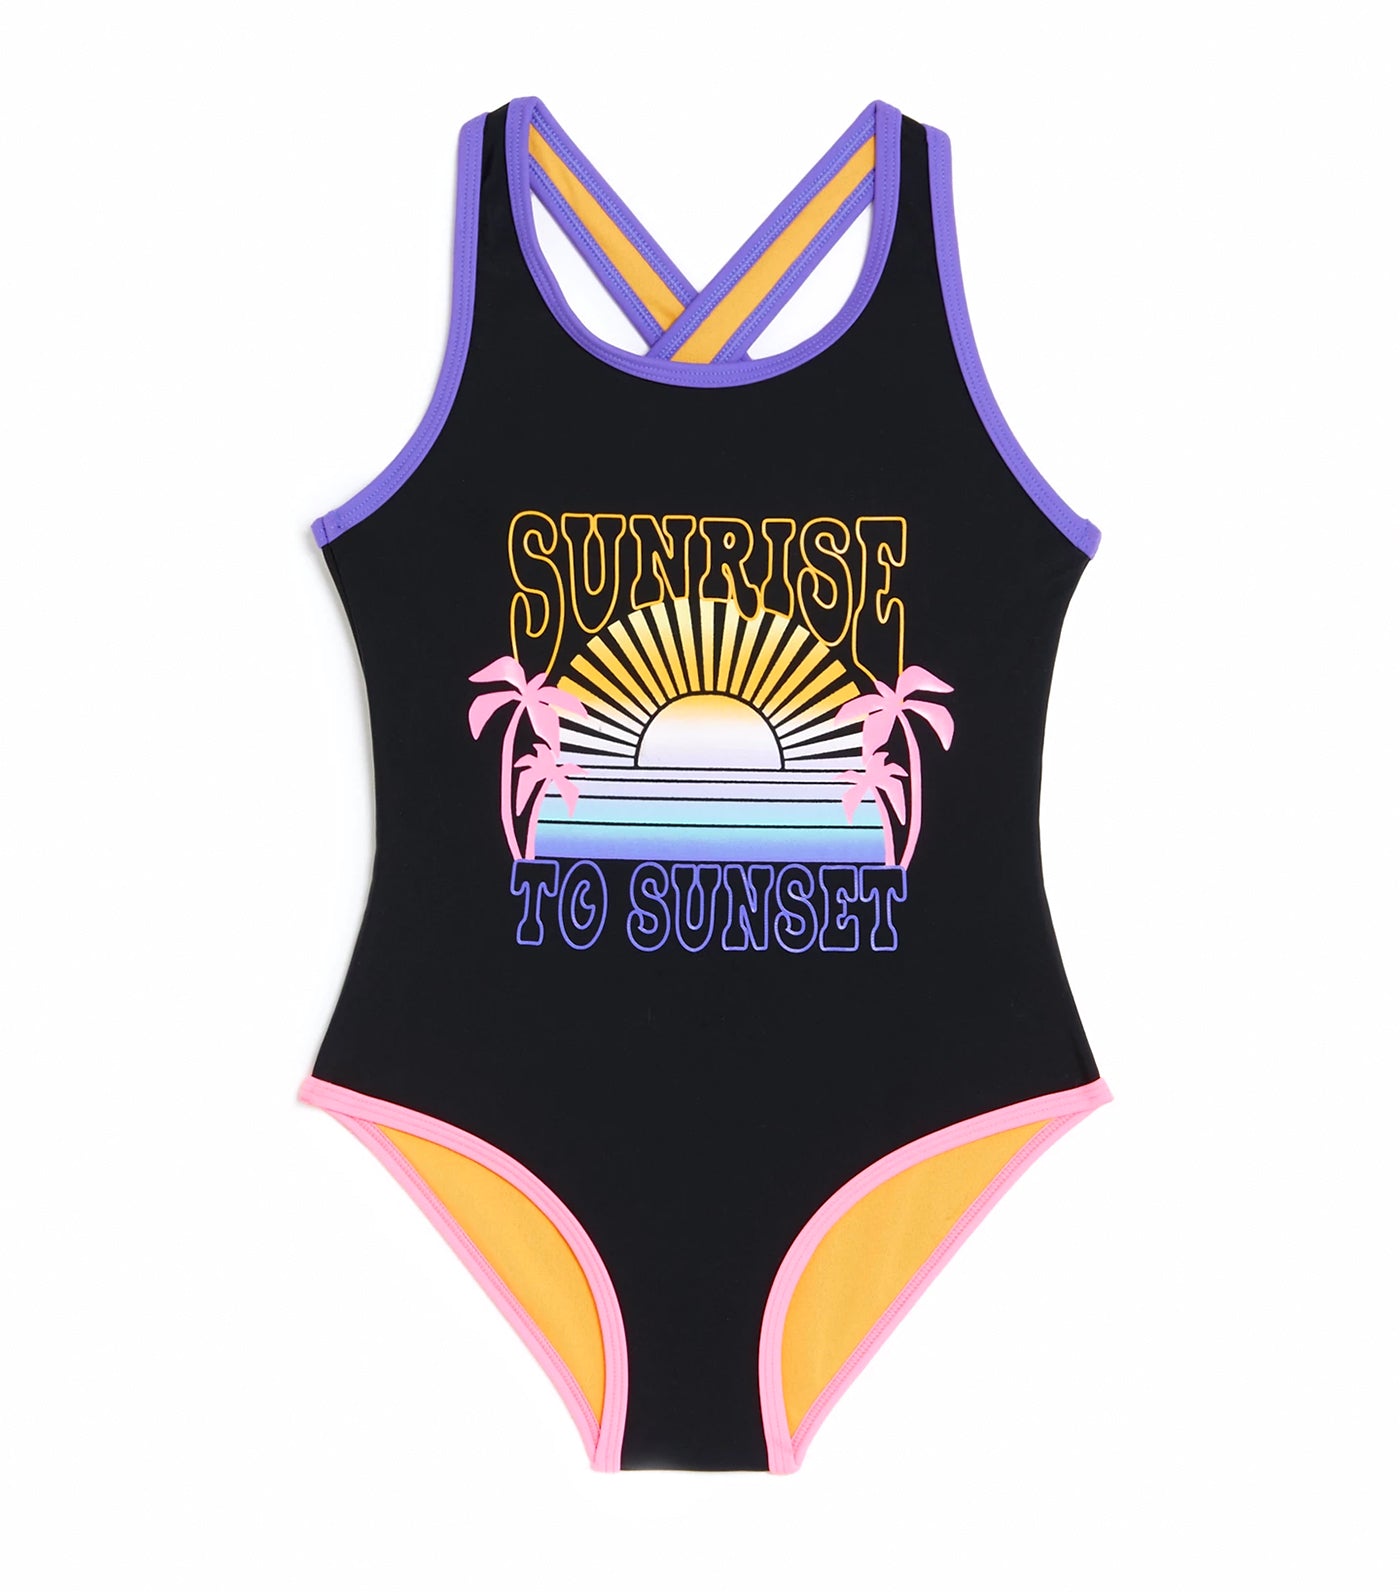 Sunrise Swimsuit